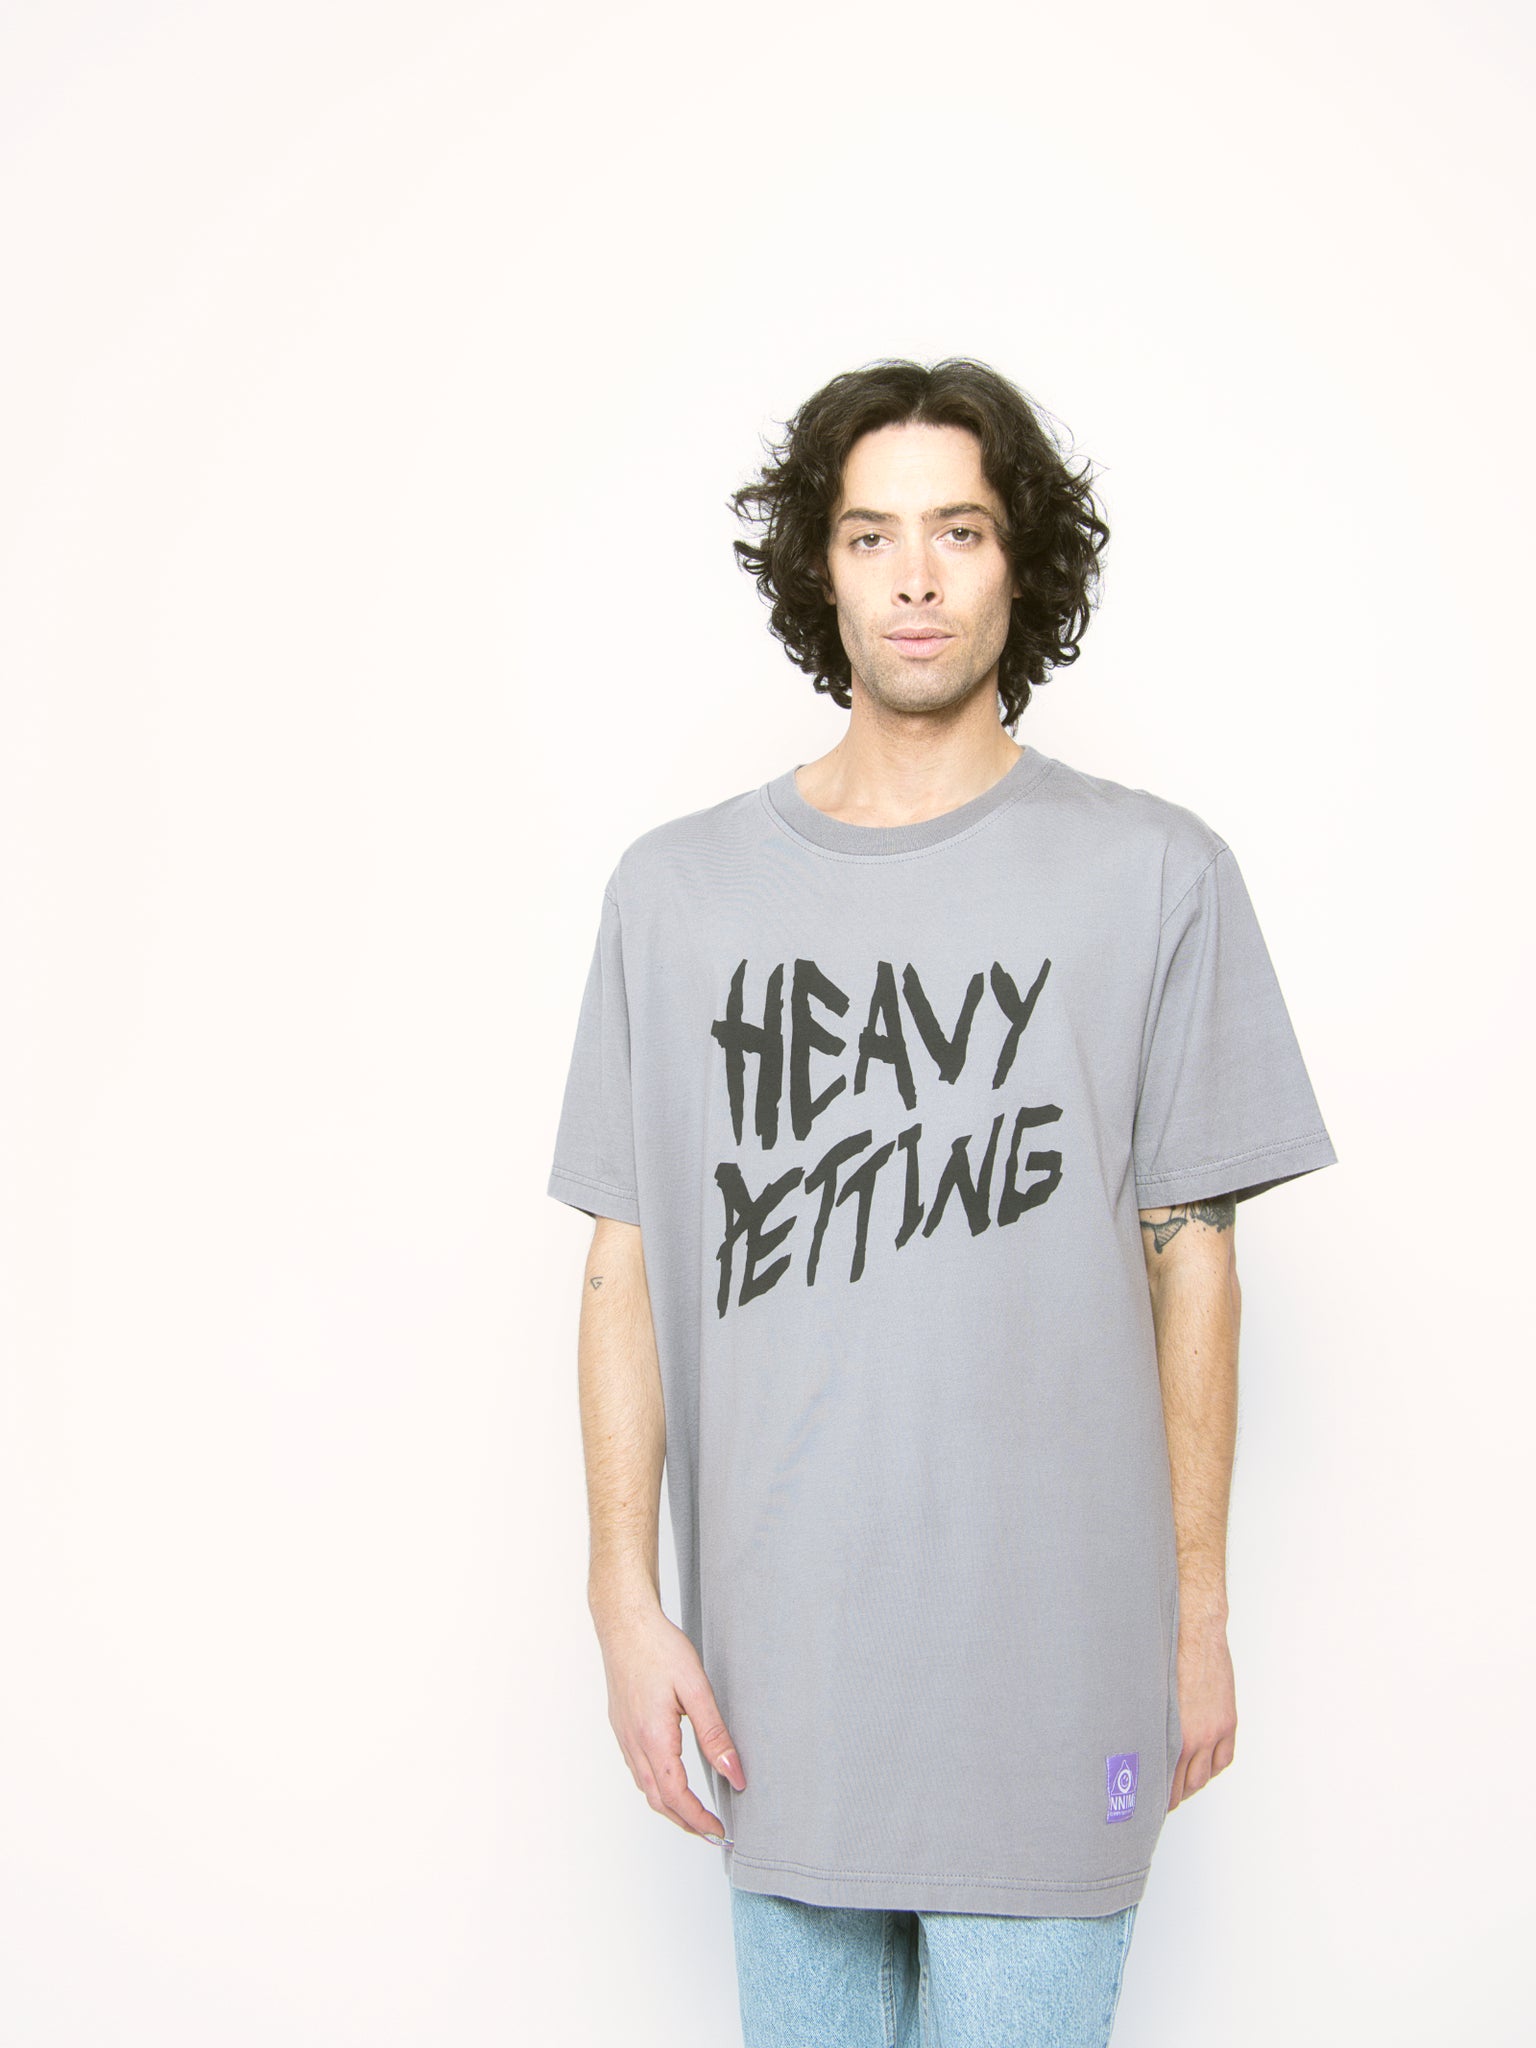 heavy petting - t-shirt - unisex